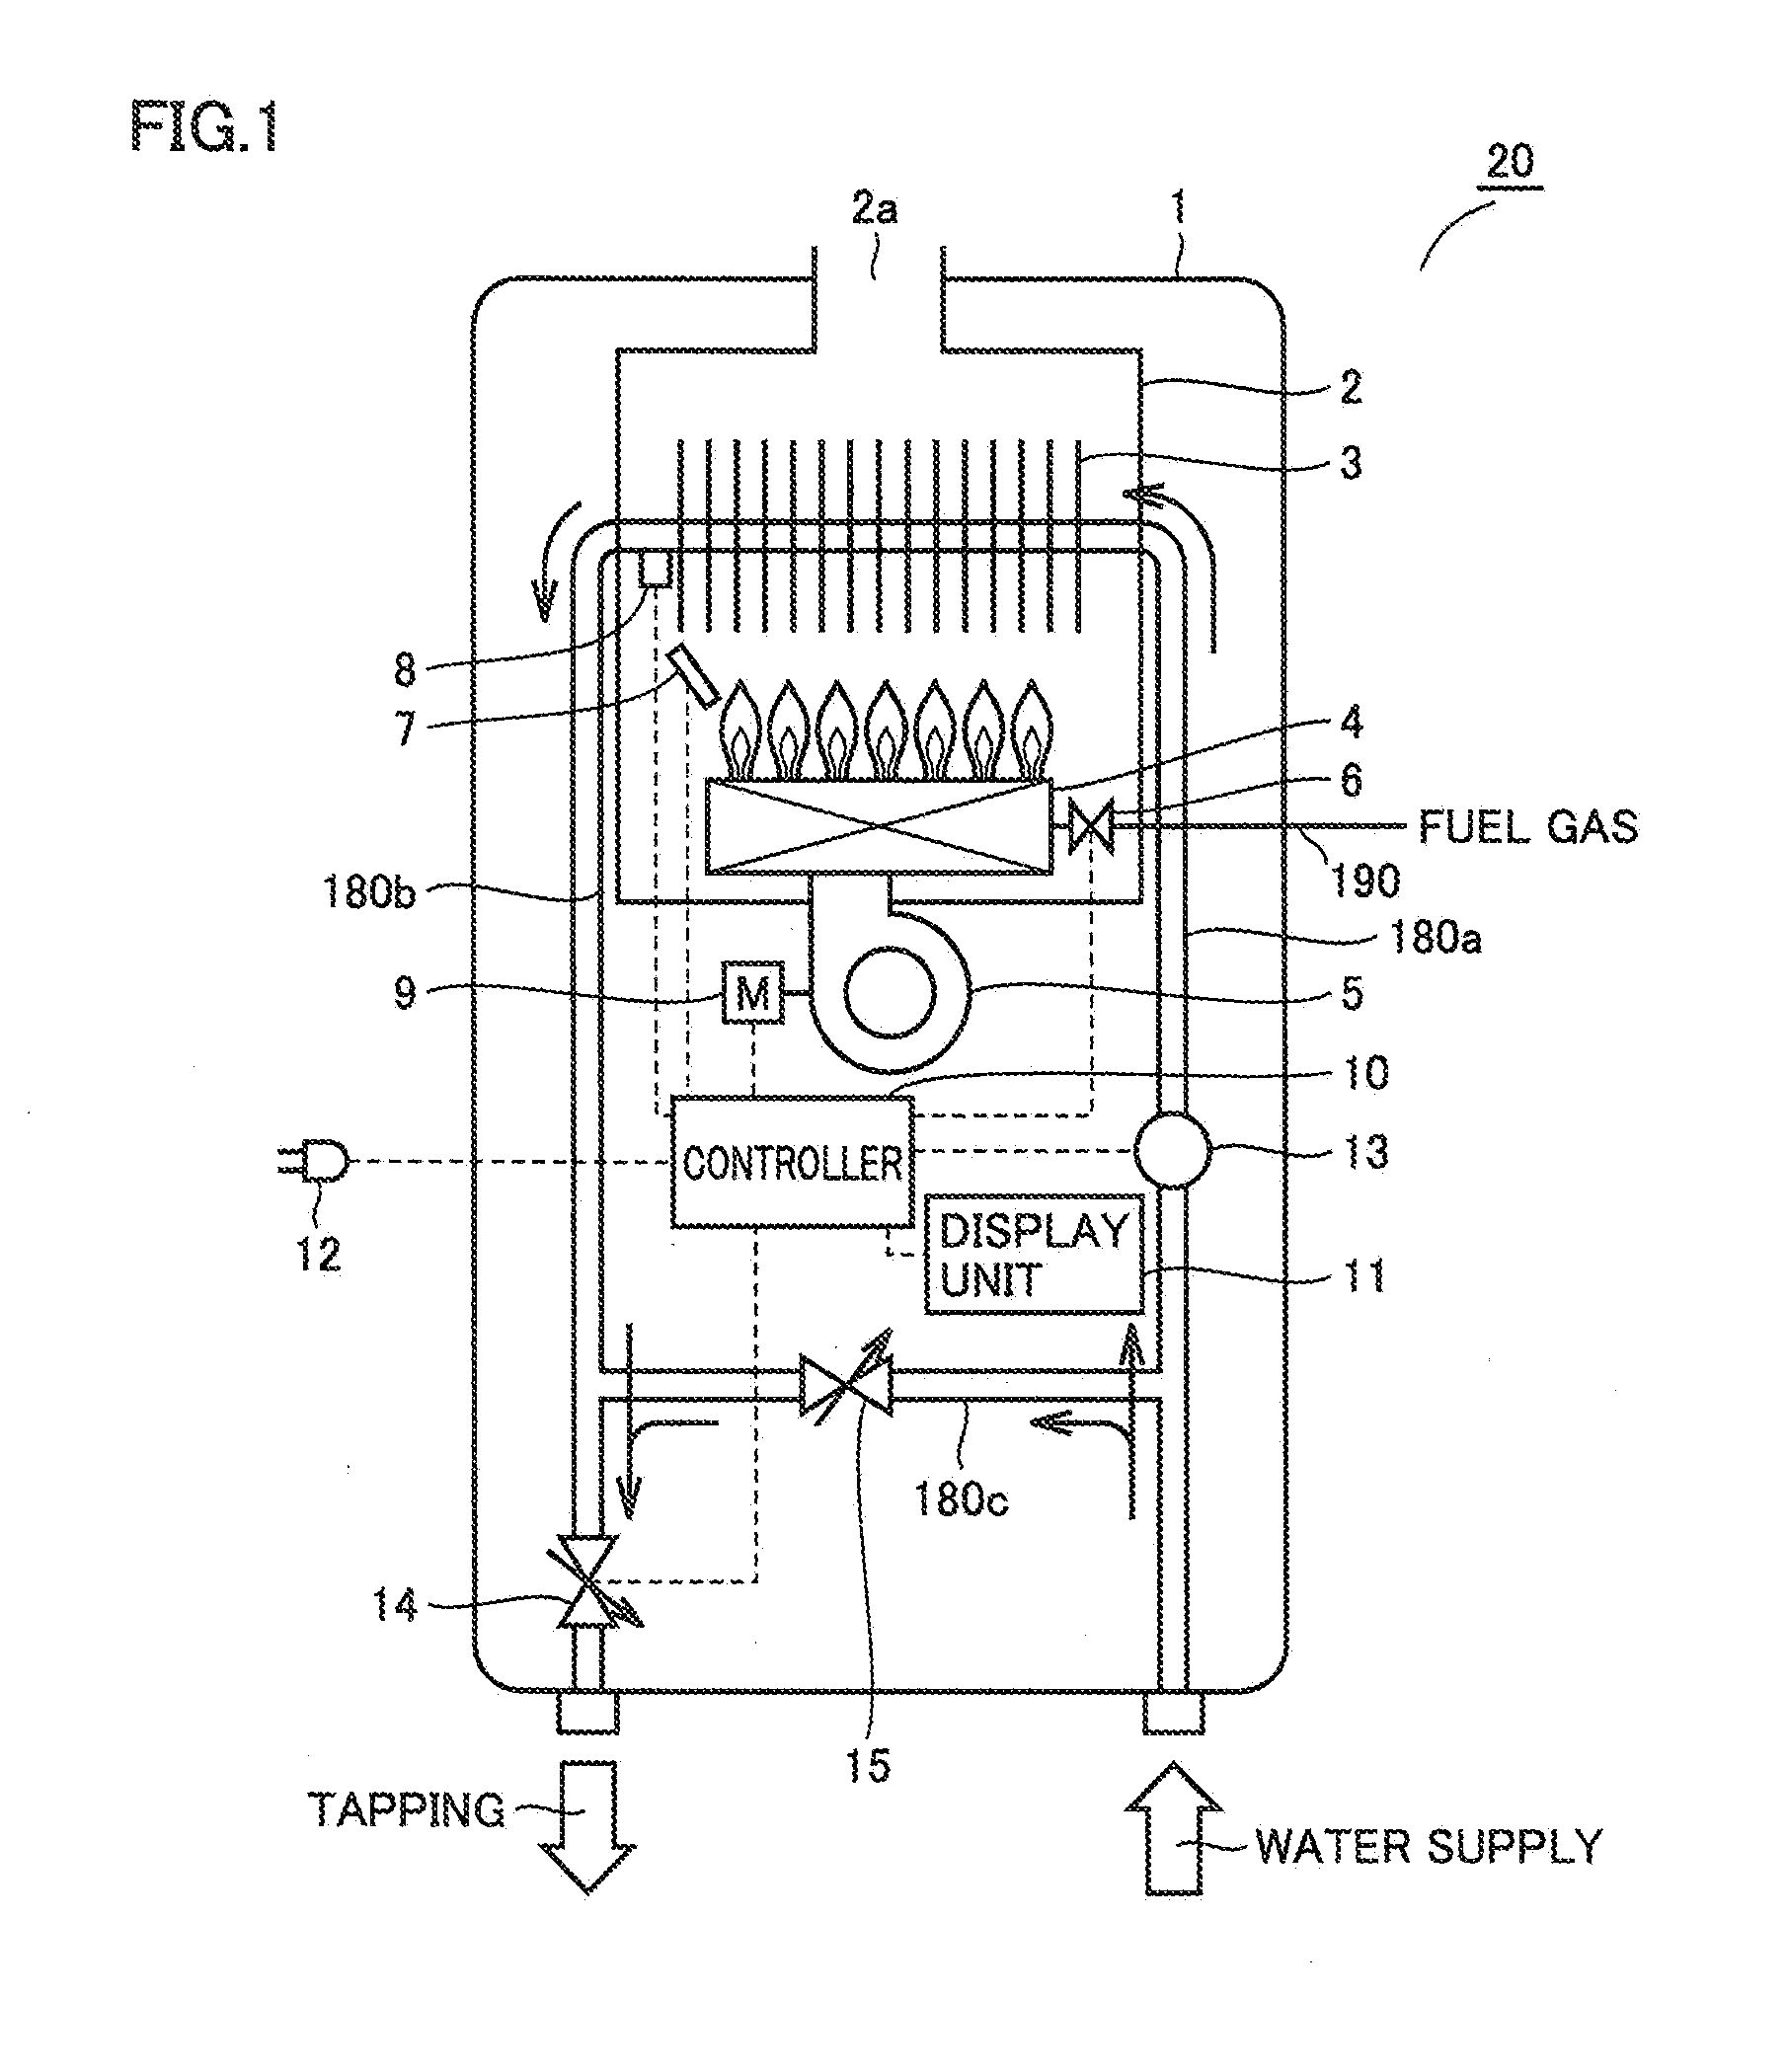 Water heating apparatus